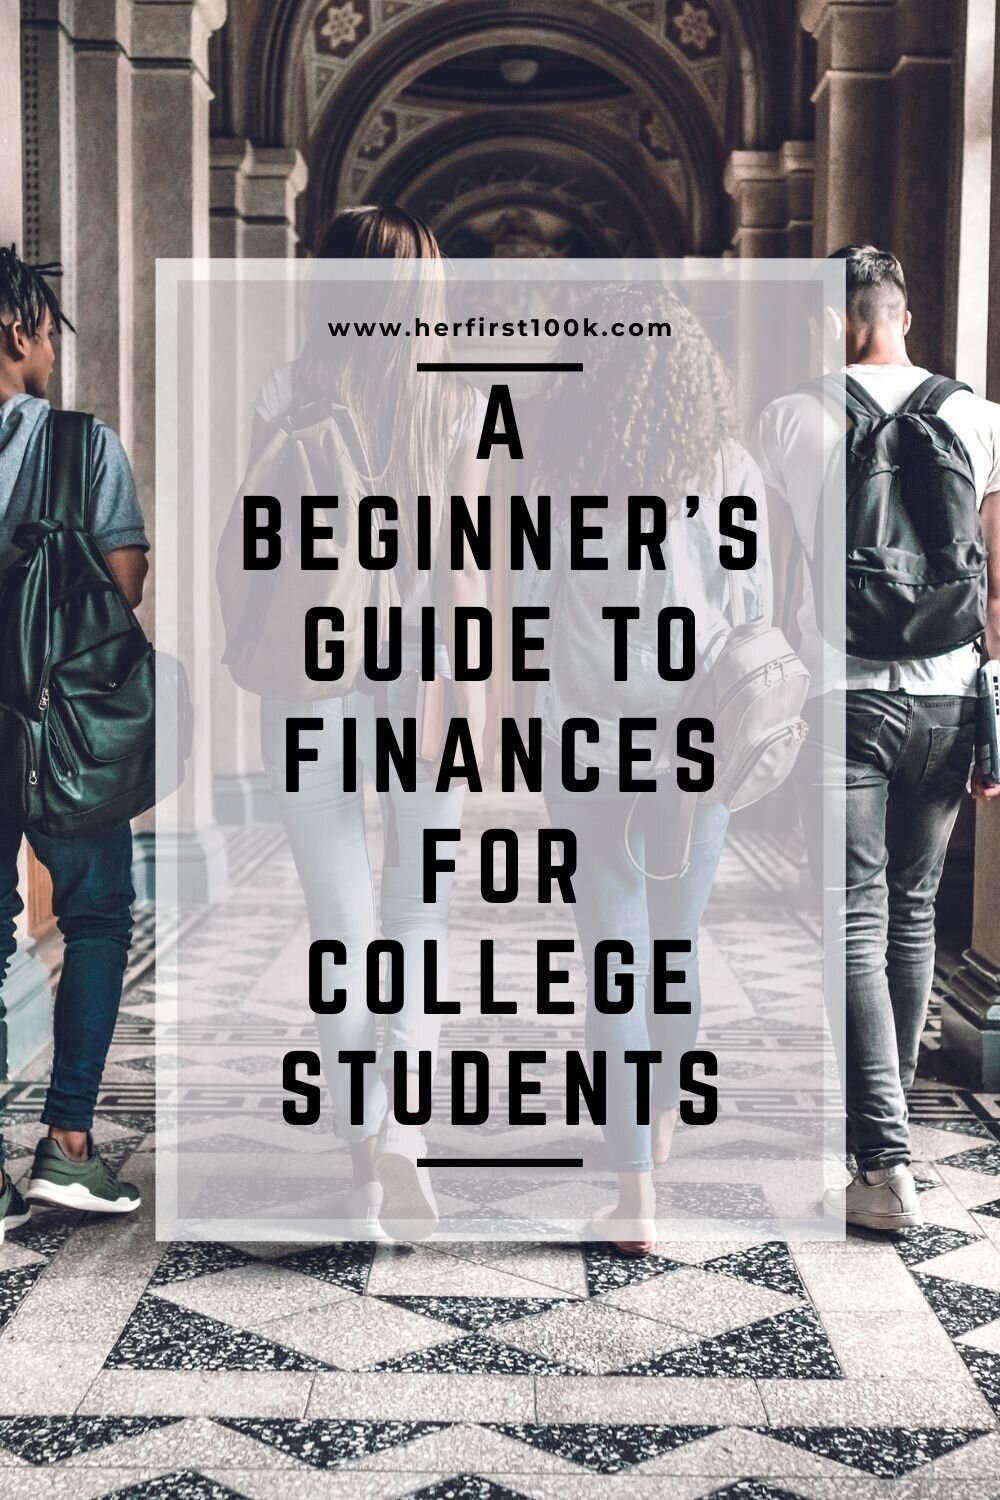 Begginer's-Guide-College-Finances-for-Students.jpg